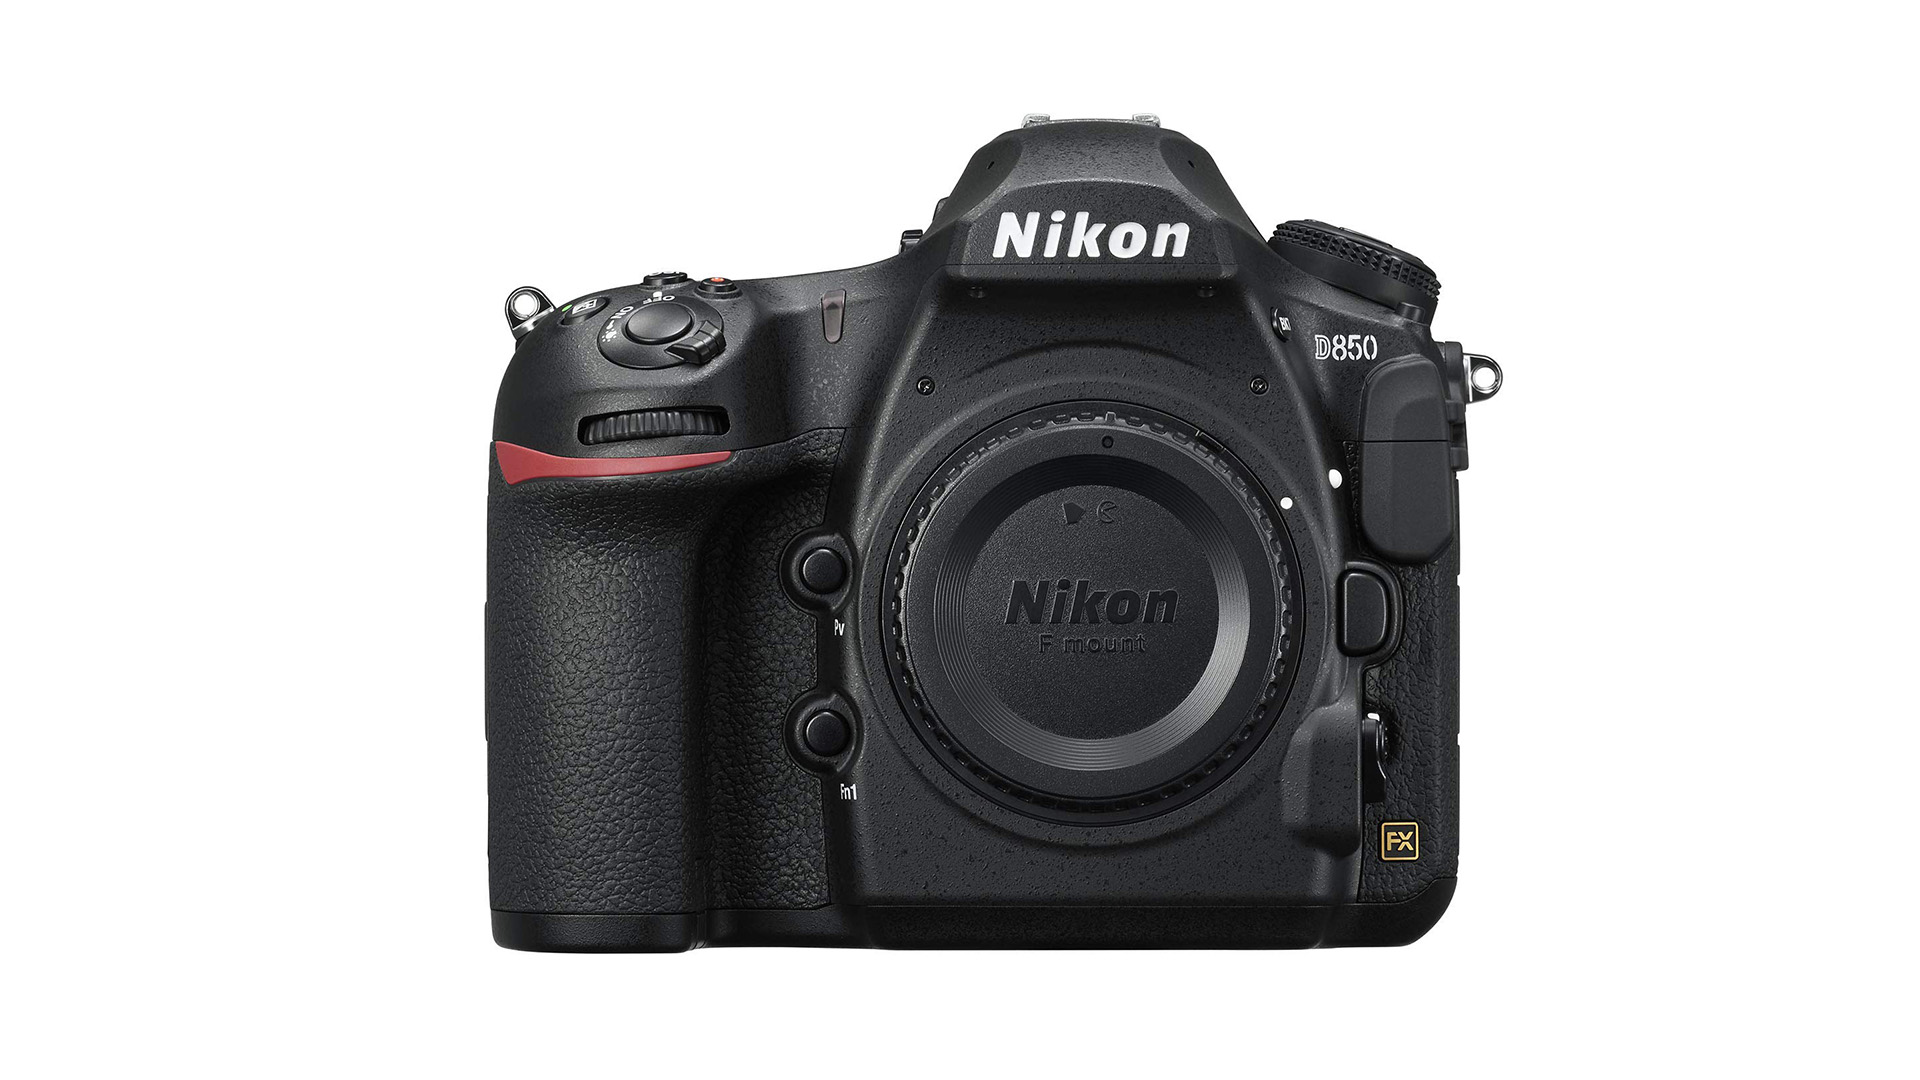 Nikon D850 camera body